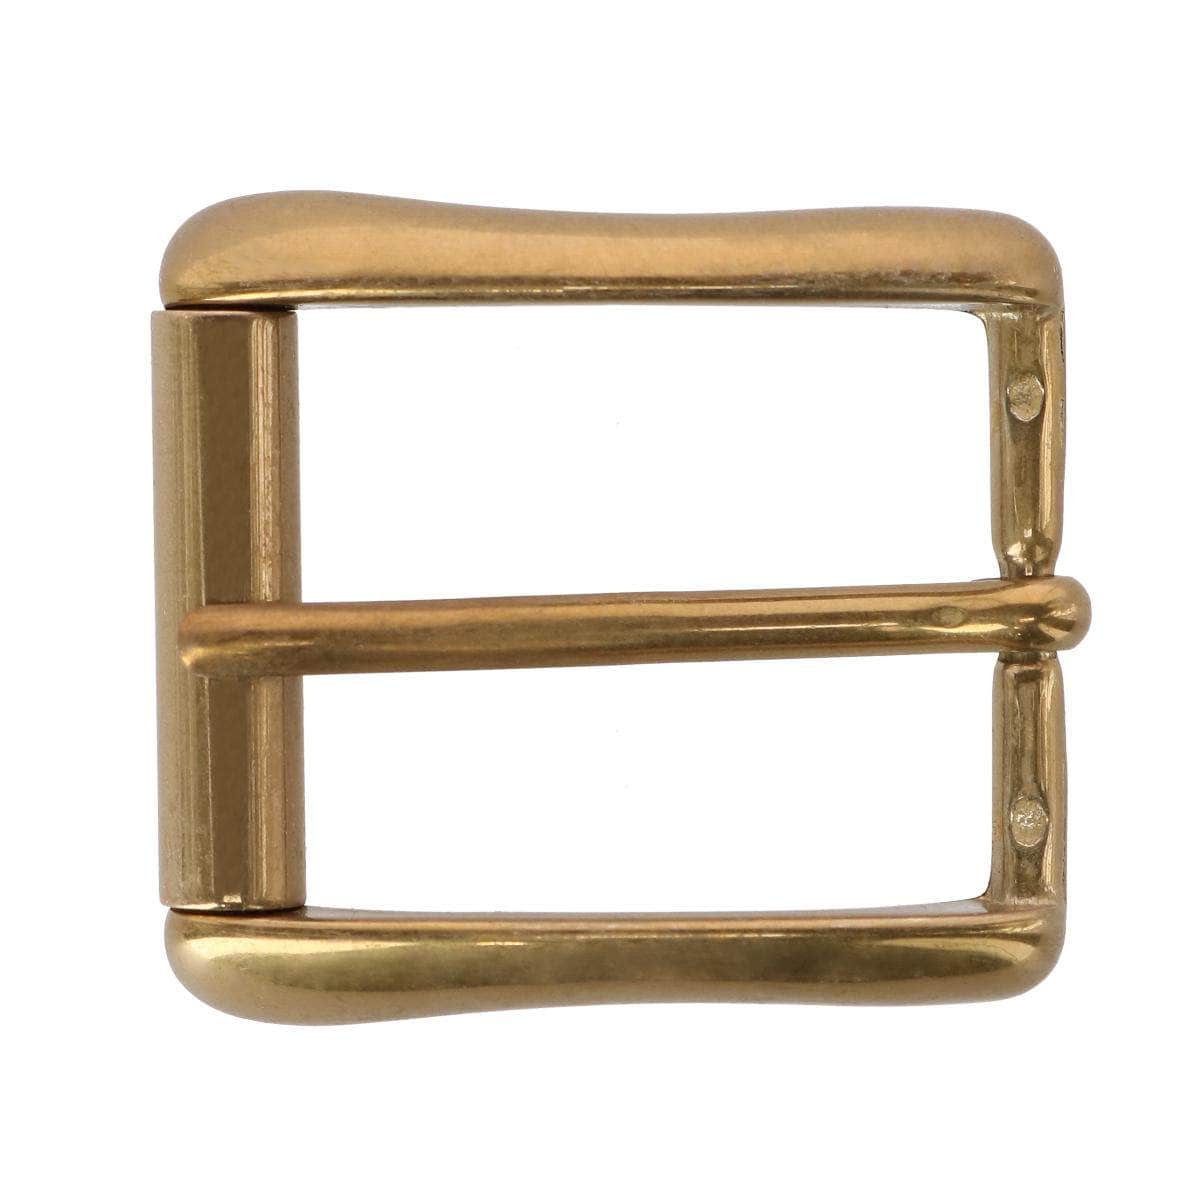 35mm Italian Brass Antique Gold Roller Buckle by Trafalgar Men's